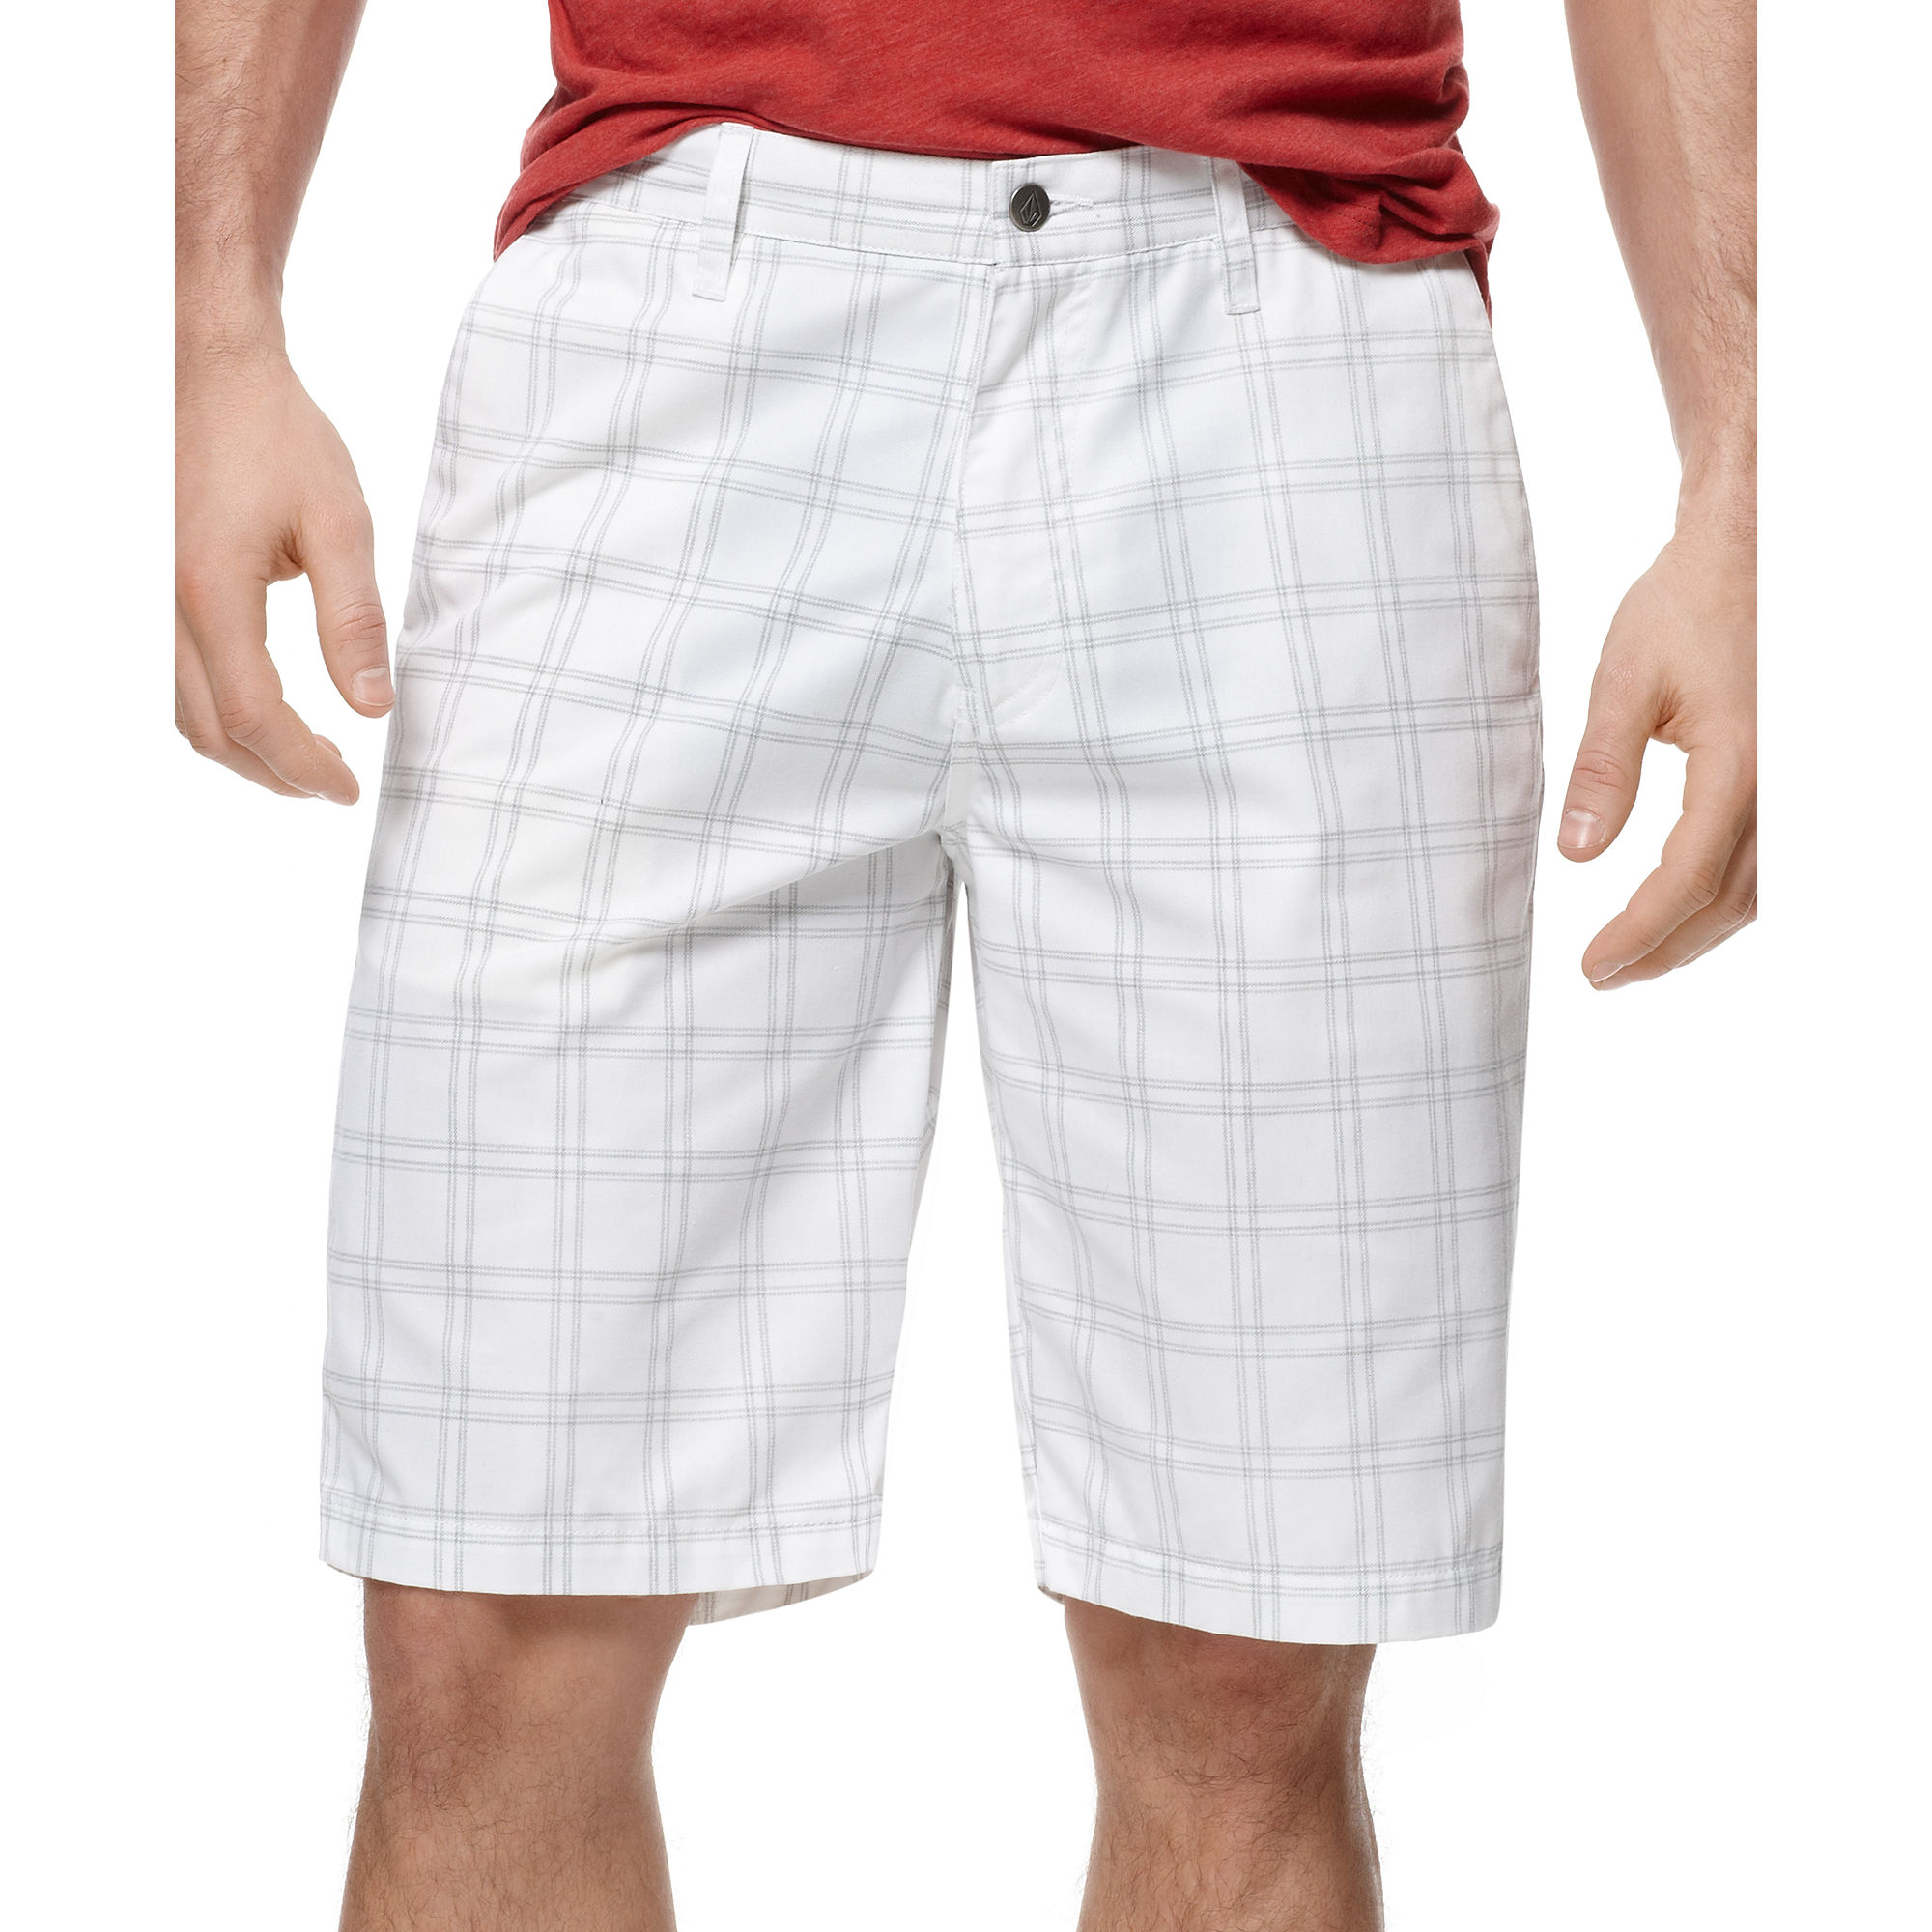 Lyst - Volcom Frickin Plaid Chino Shorts in White for Men